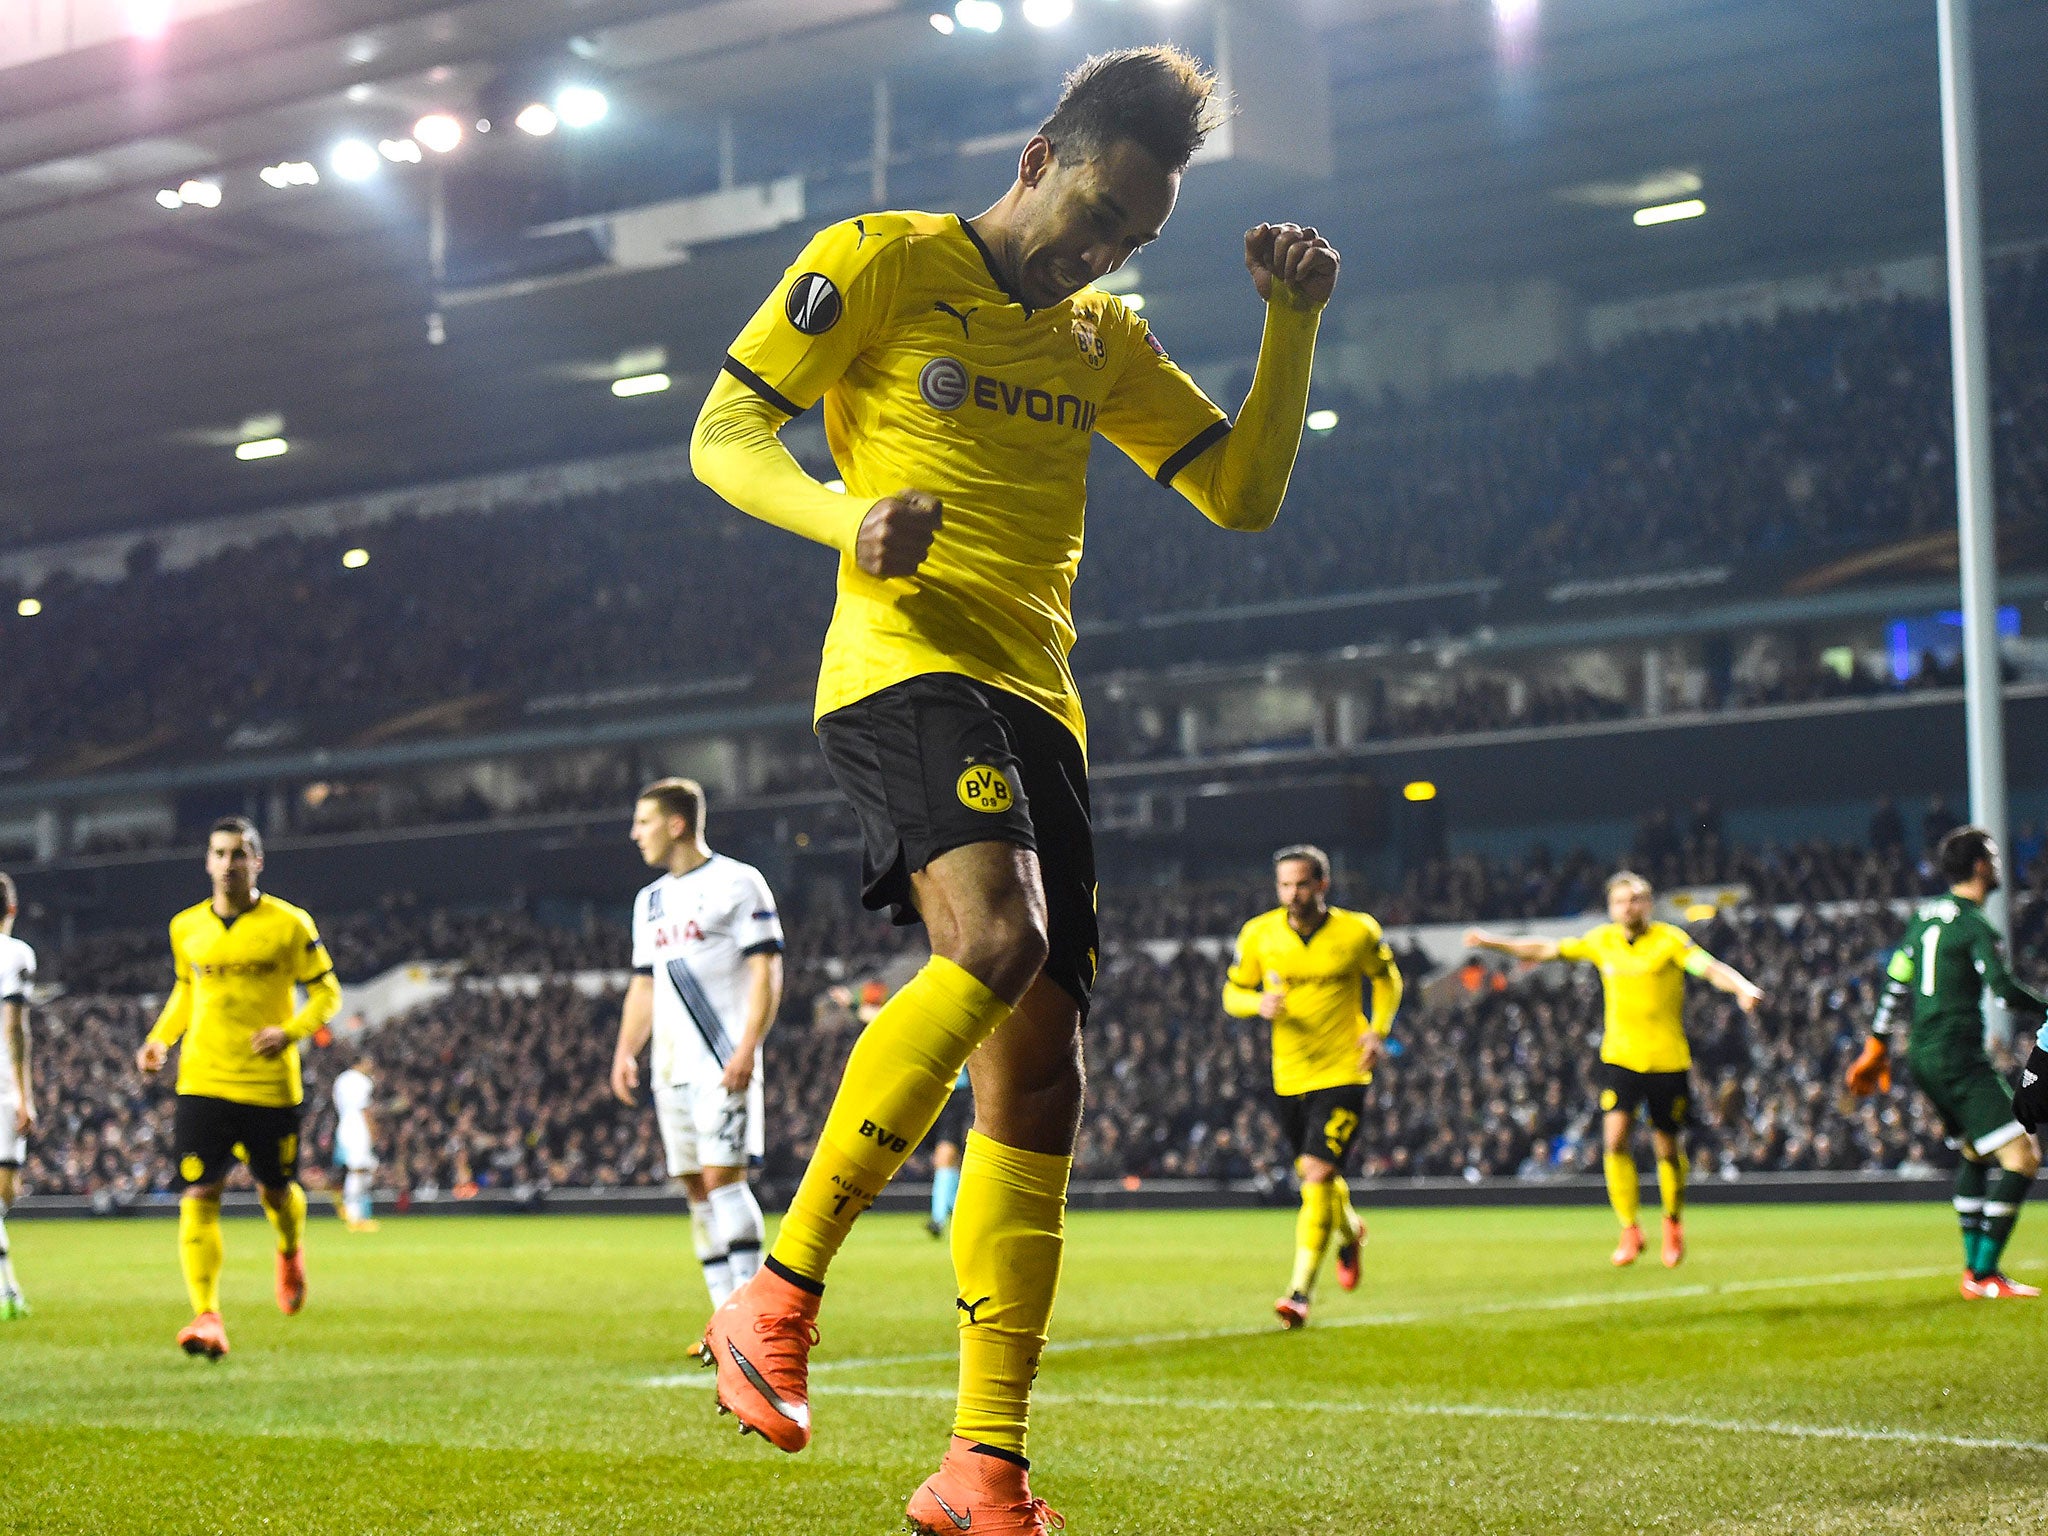 Dortmund's Pierre-Emerick Aubameyang, center, celebrates after scoring the 2-0 lead during the match between Tottenham Hotspur vs Borussia Dortmund